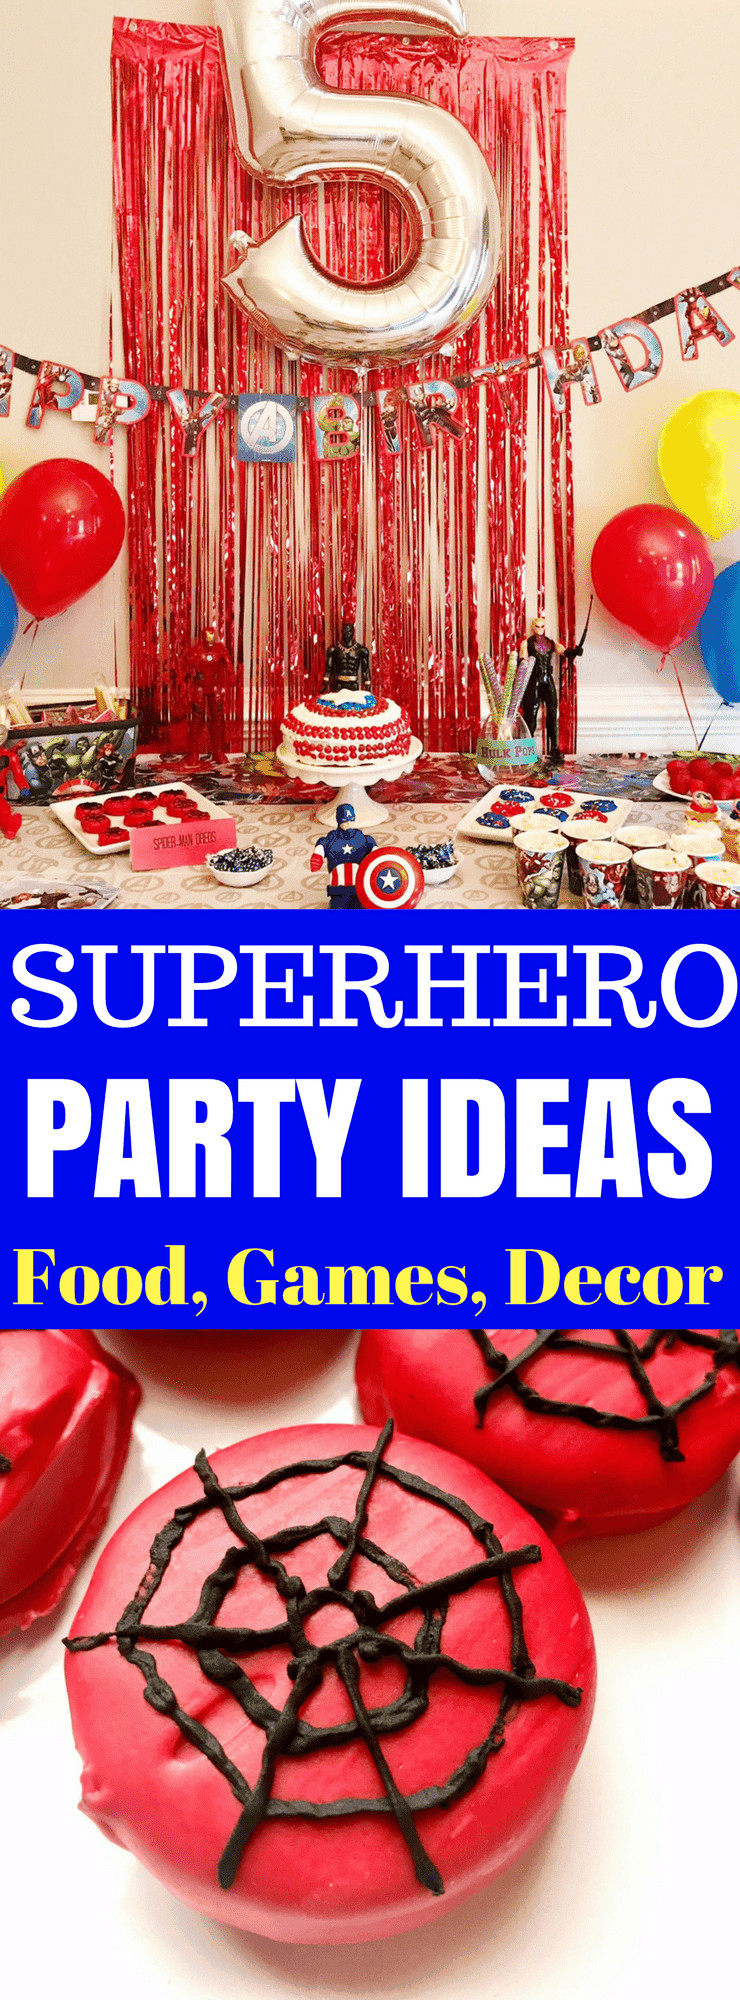 Superhero Halloween Party Ideas
 Superhero Party Ideas Avengers Party Games Decor Food